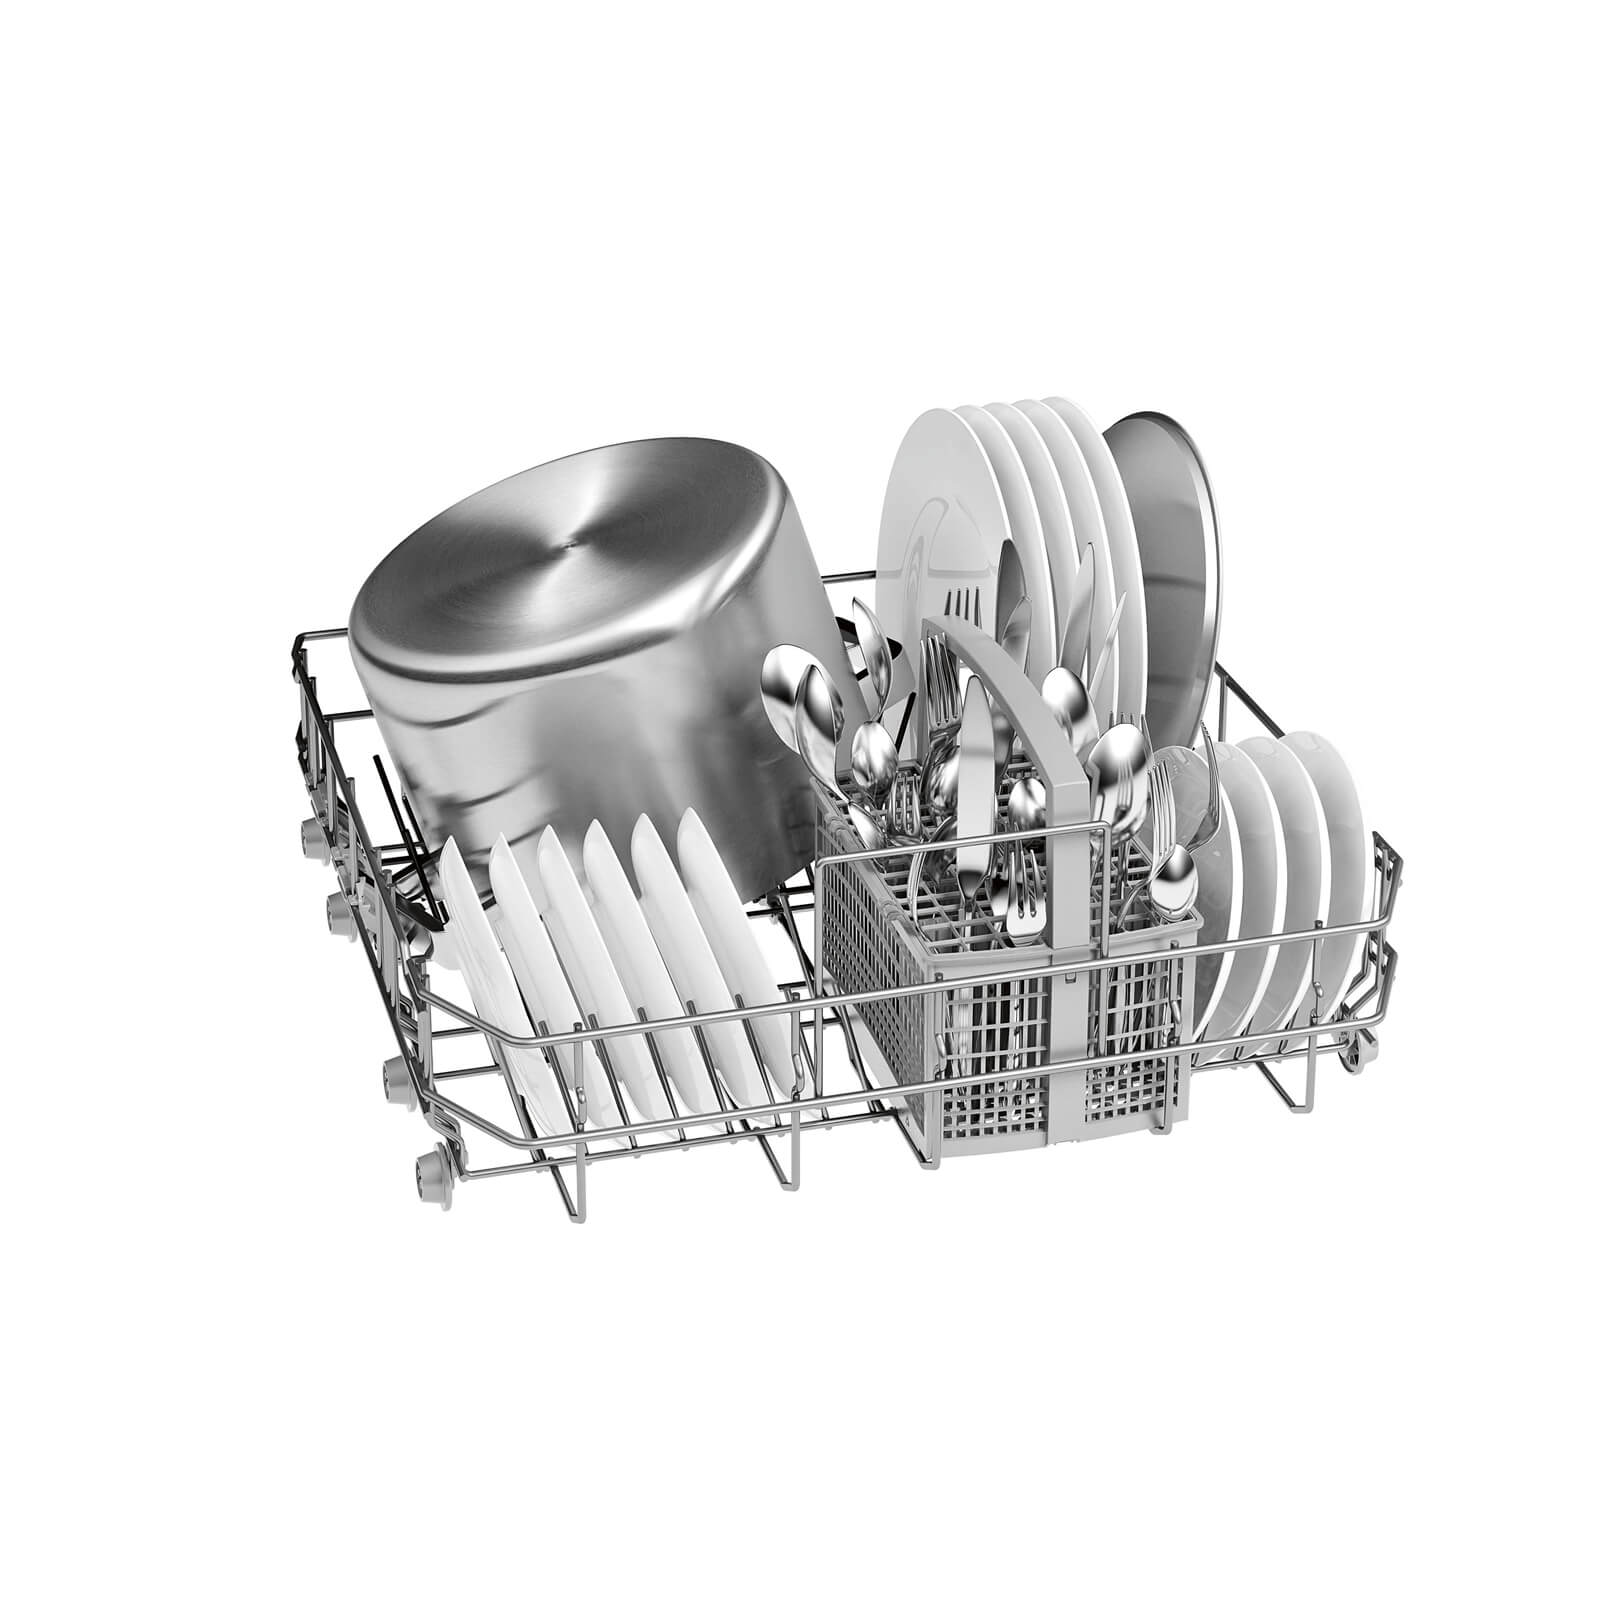 NEFF S511A50X0G 60cm Dishwasher